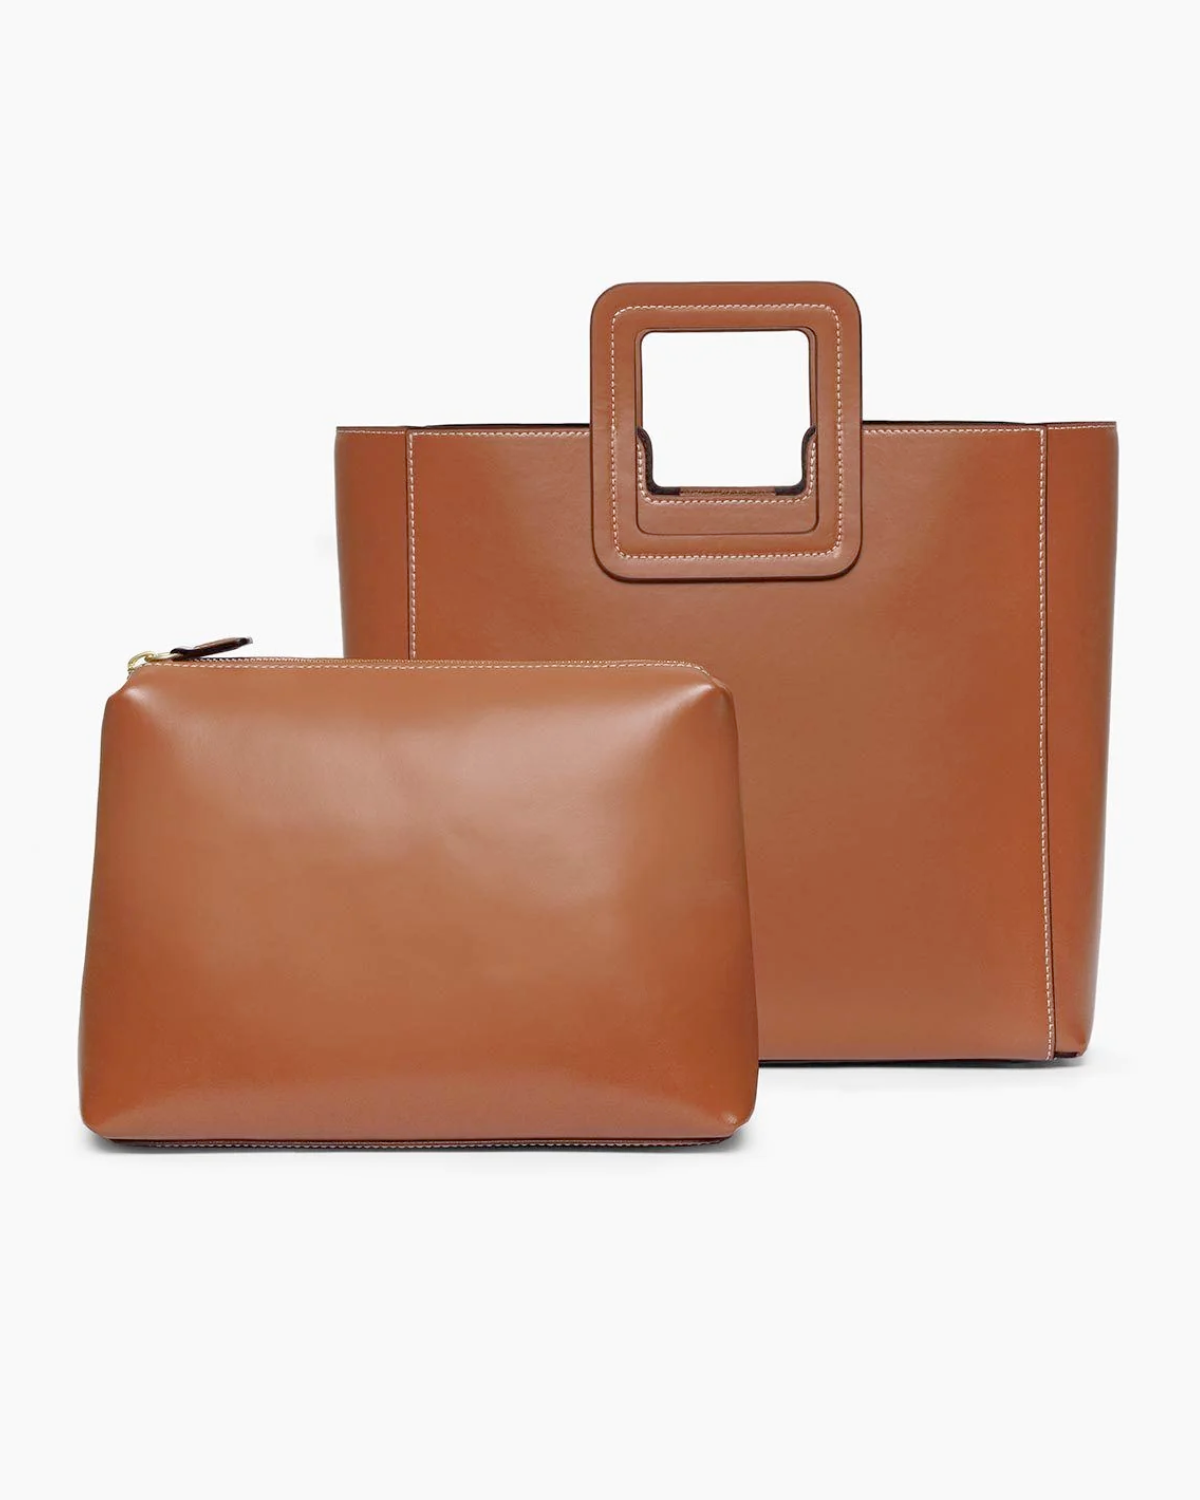 Shirley Leather Tote Bag (Tan)